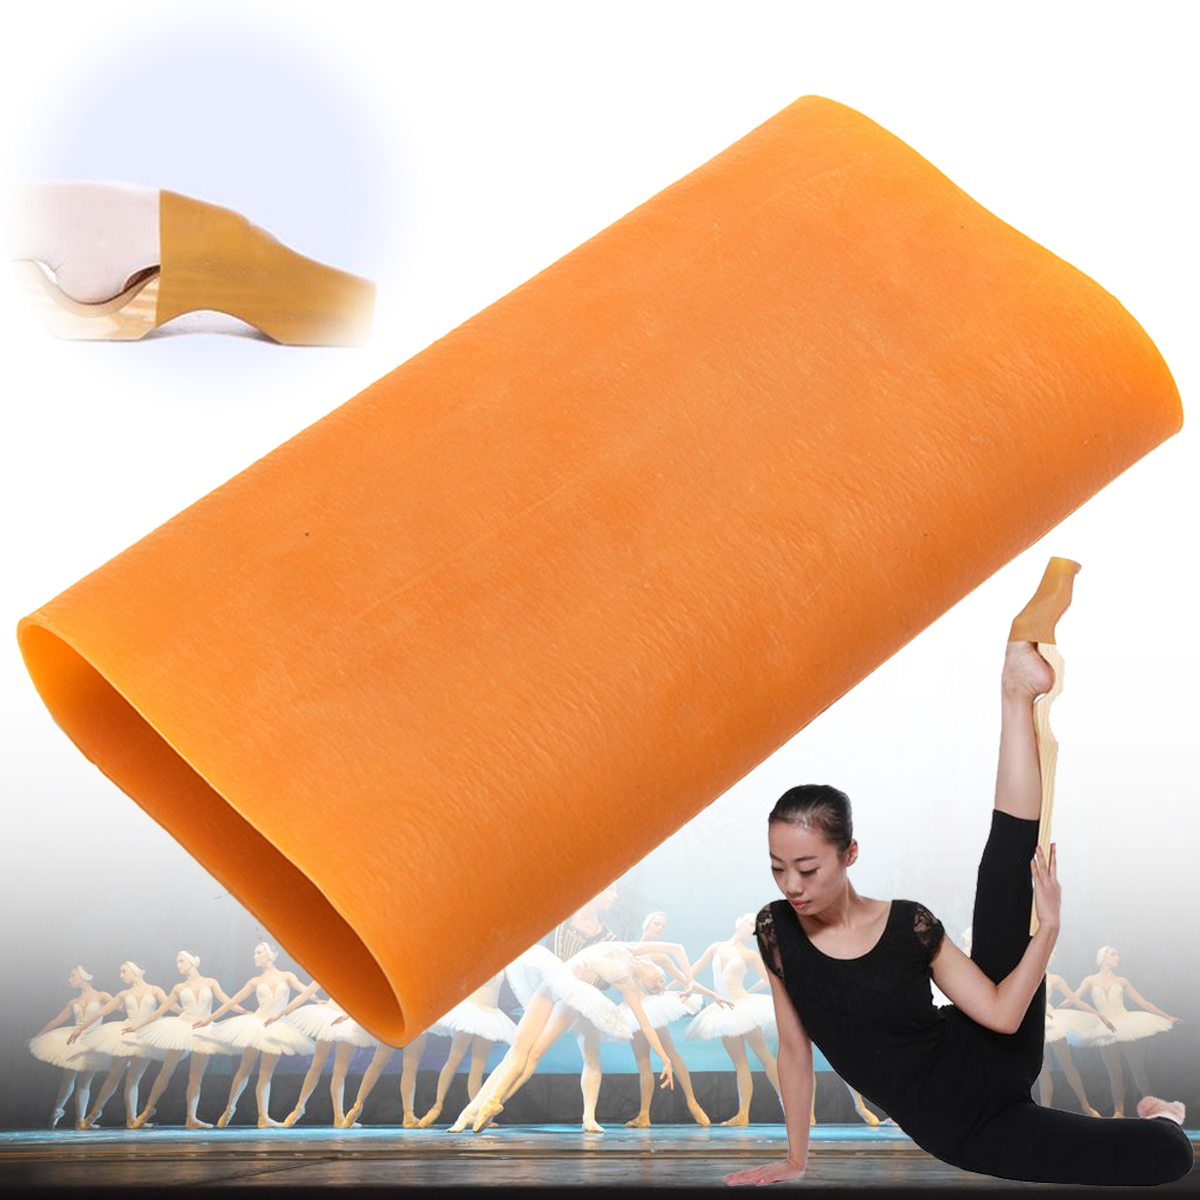 

Elastic Rubber Sleeve Sports Bandage For Ballet Foot Stretcher Arch Enhancer Gymnastics Shaping